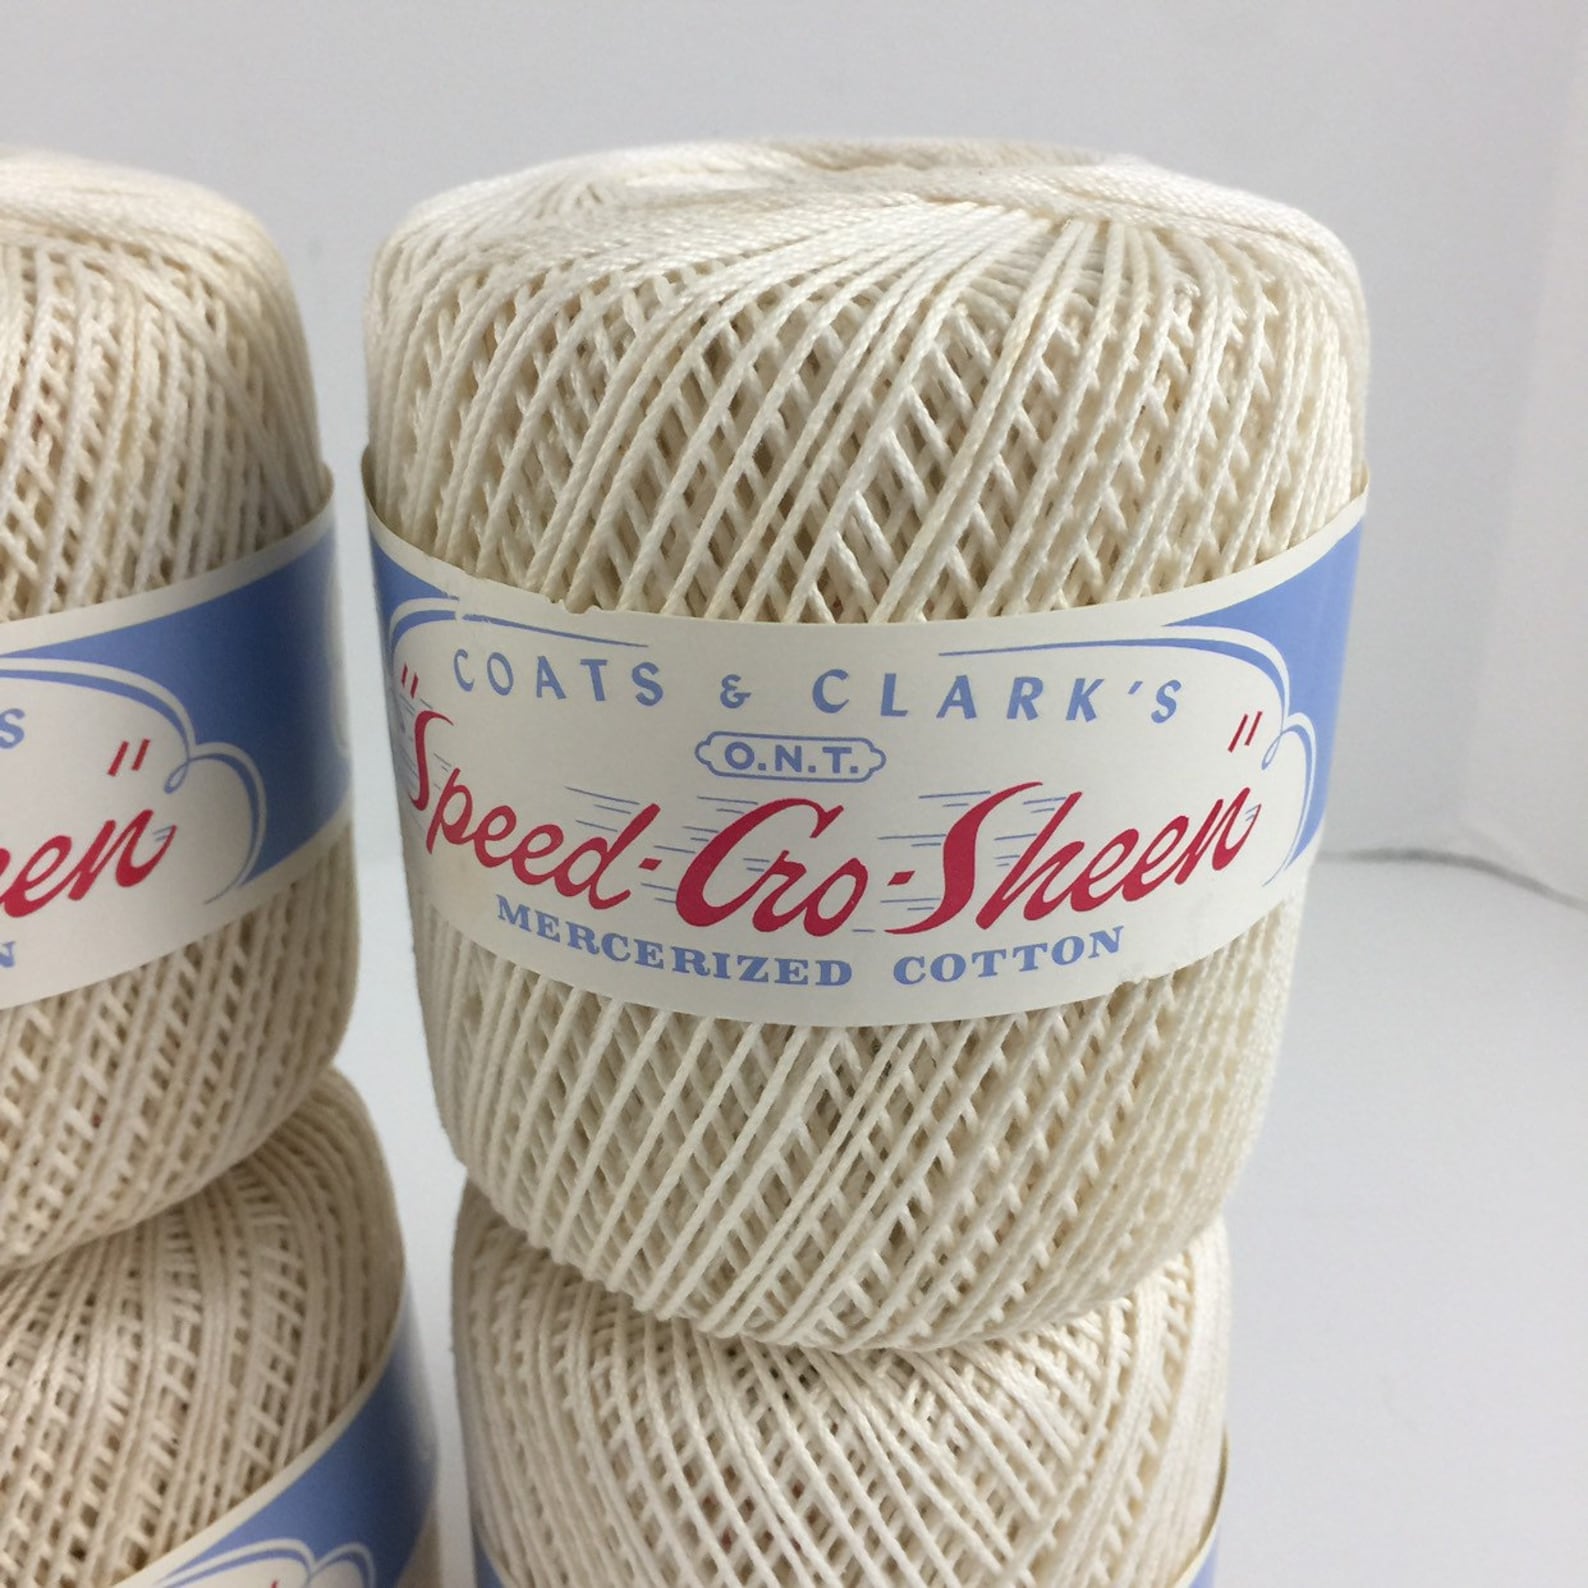 VTG Coats and Clark's Speed-Cro-Sheen Mercerized Cotton | Etsy